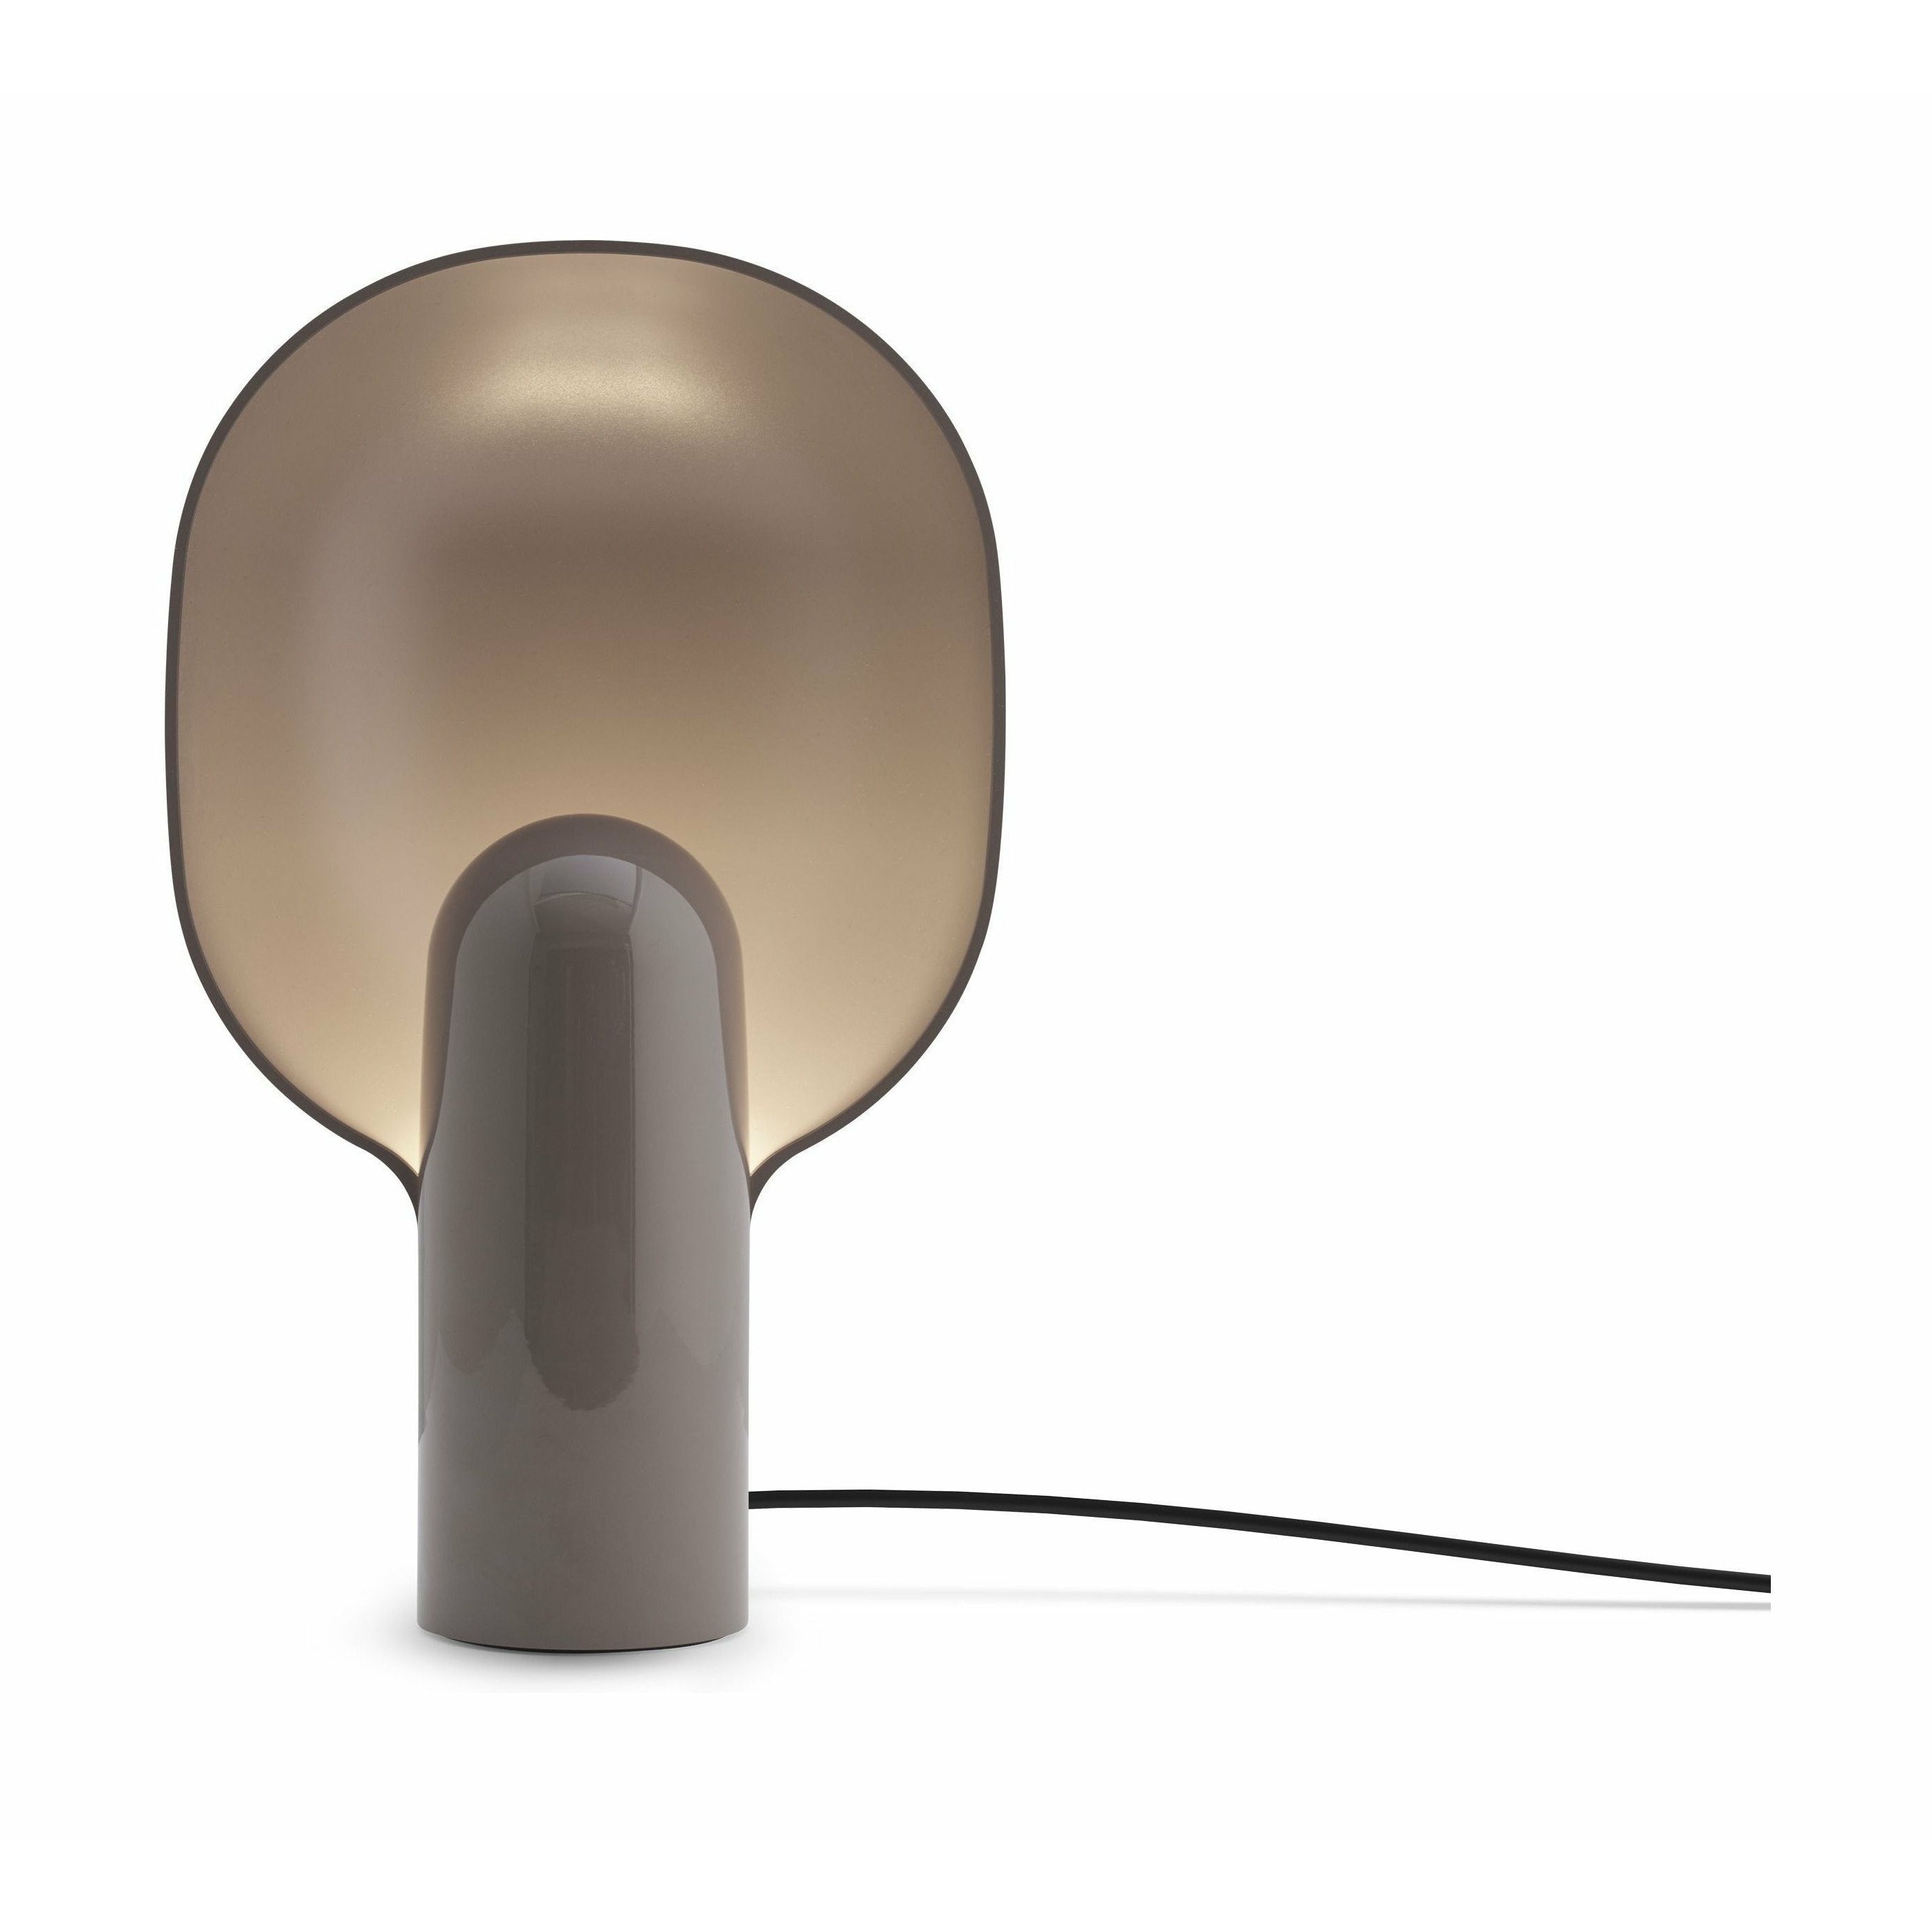 New Works Ware bordslampa, grå